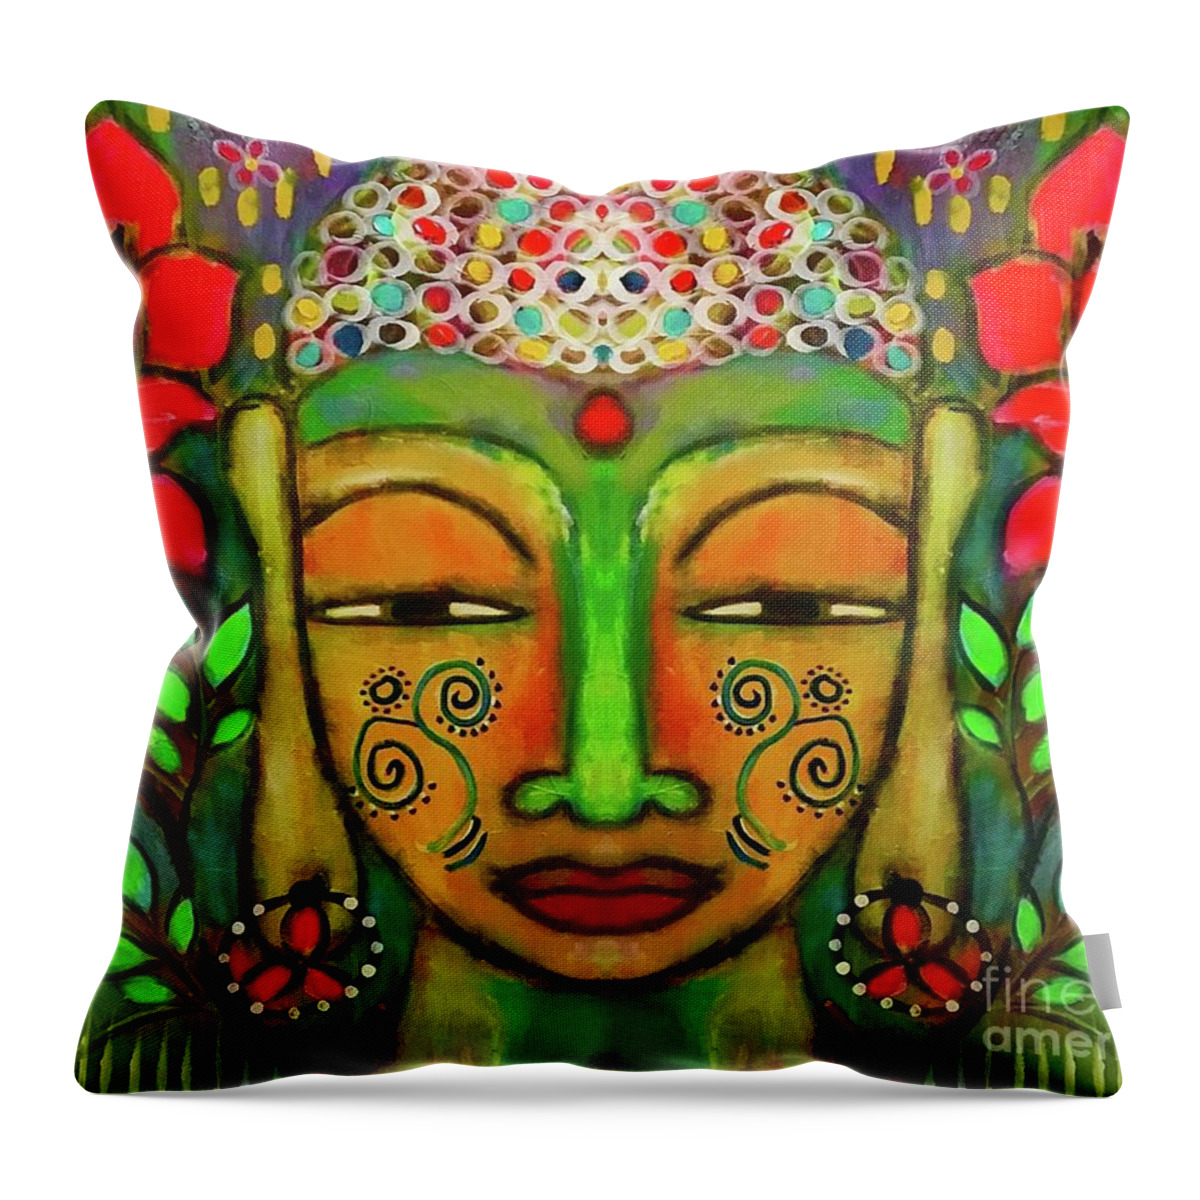 Buddha Throw Pillow featuring the painting Buddha with red irises by Corina Stupu Thomas